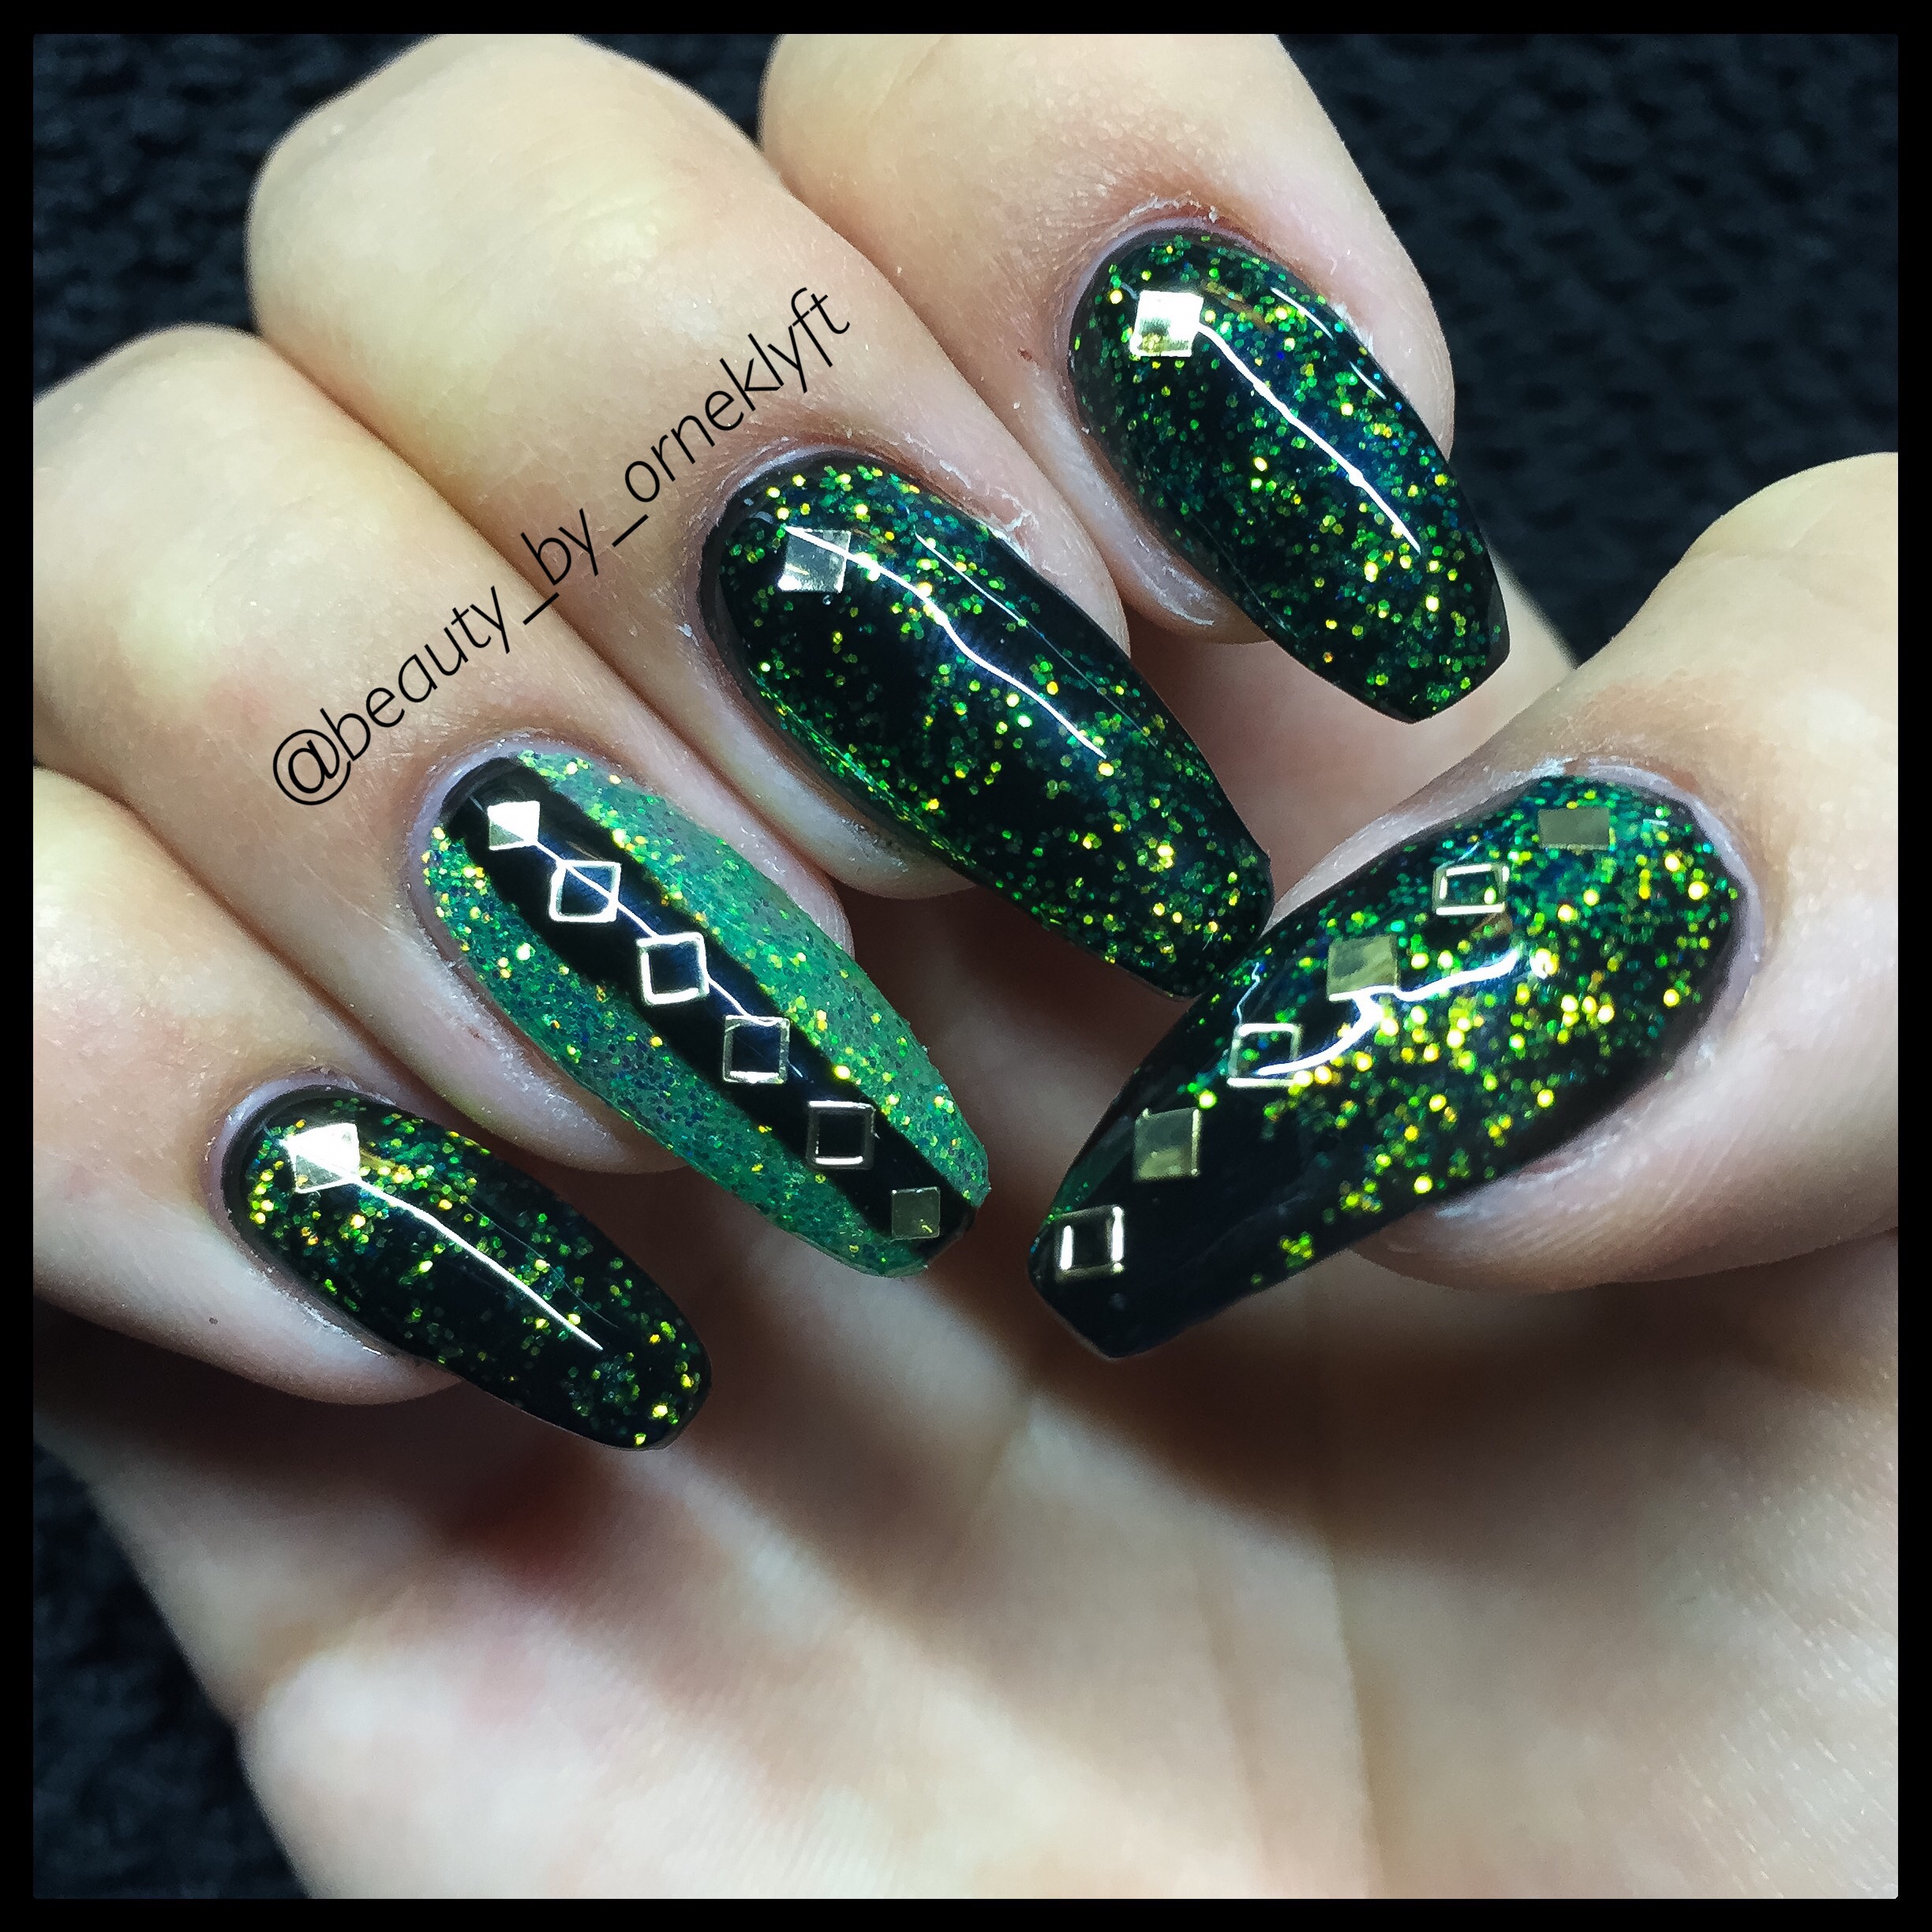 nails by Beauty by :Orneklyft